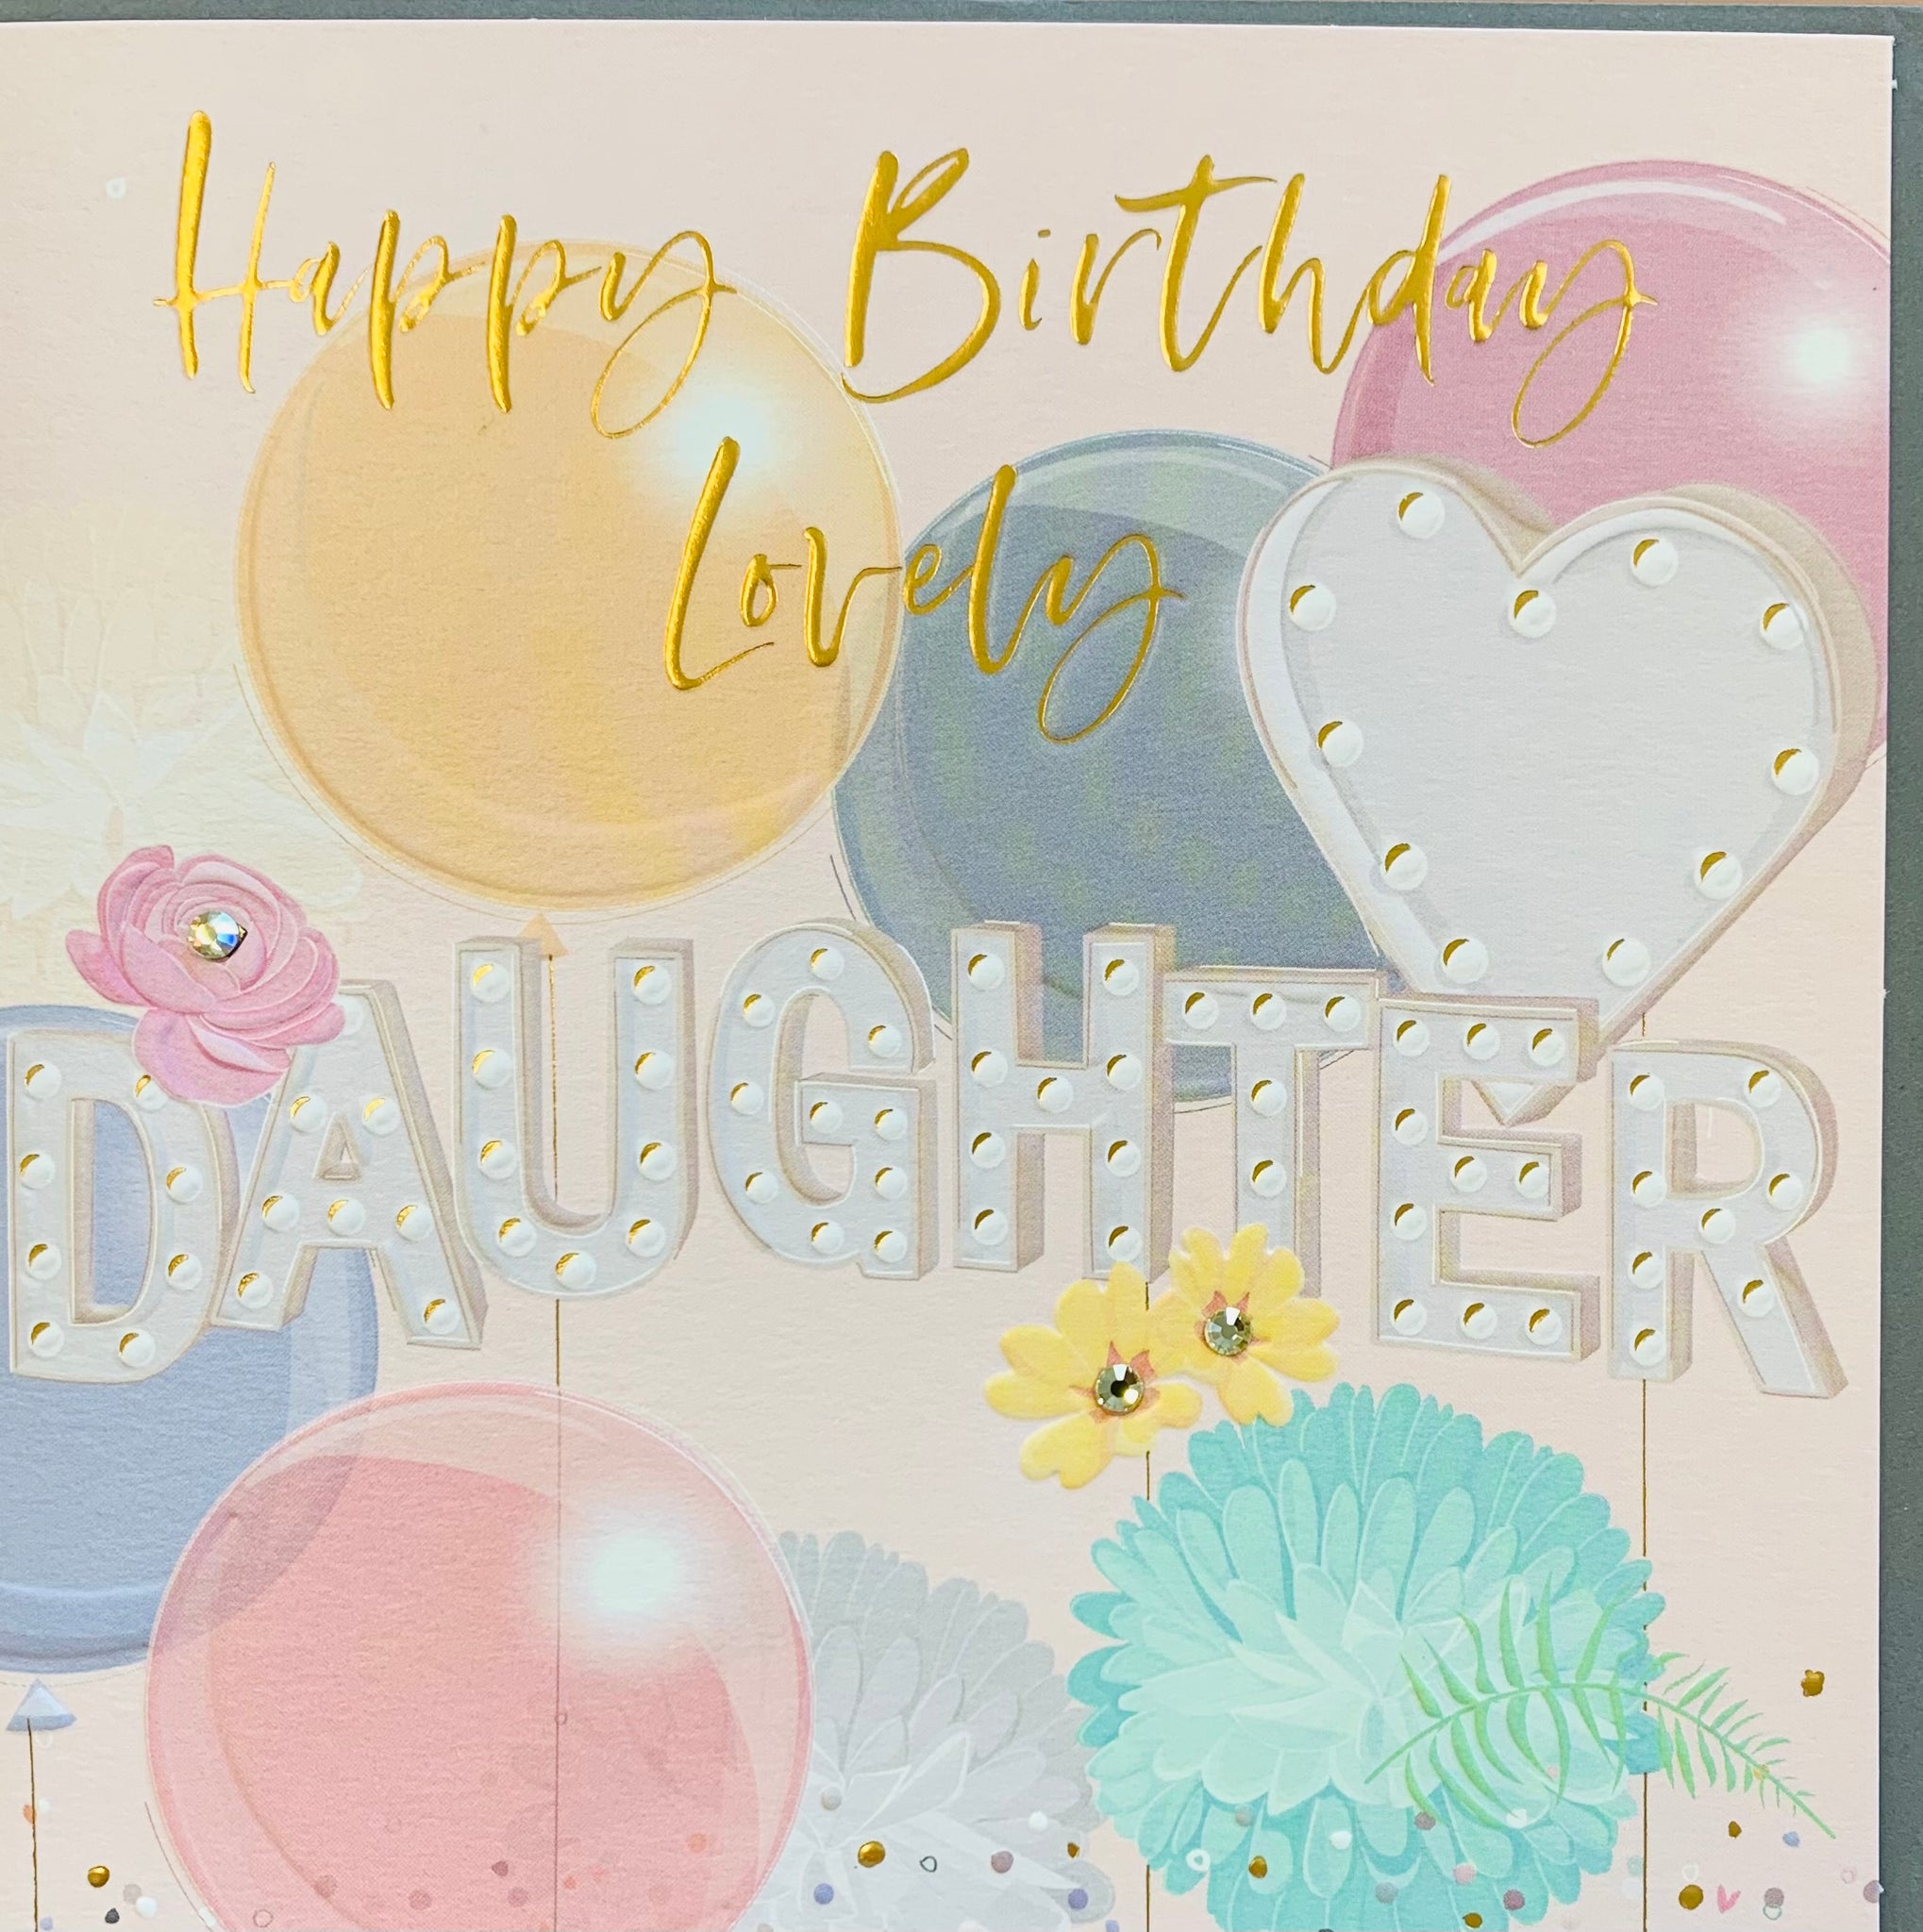 Birthday Daughter